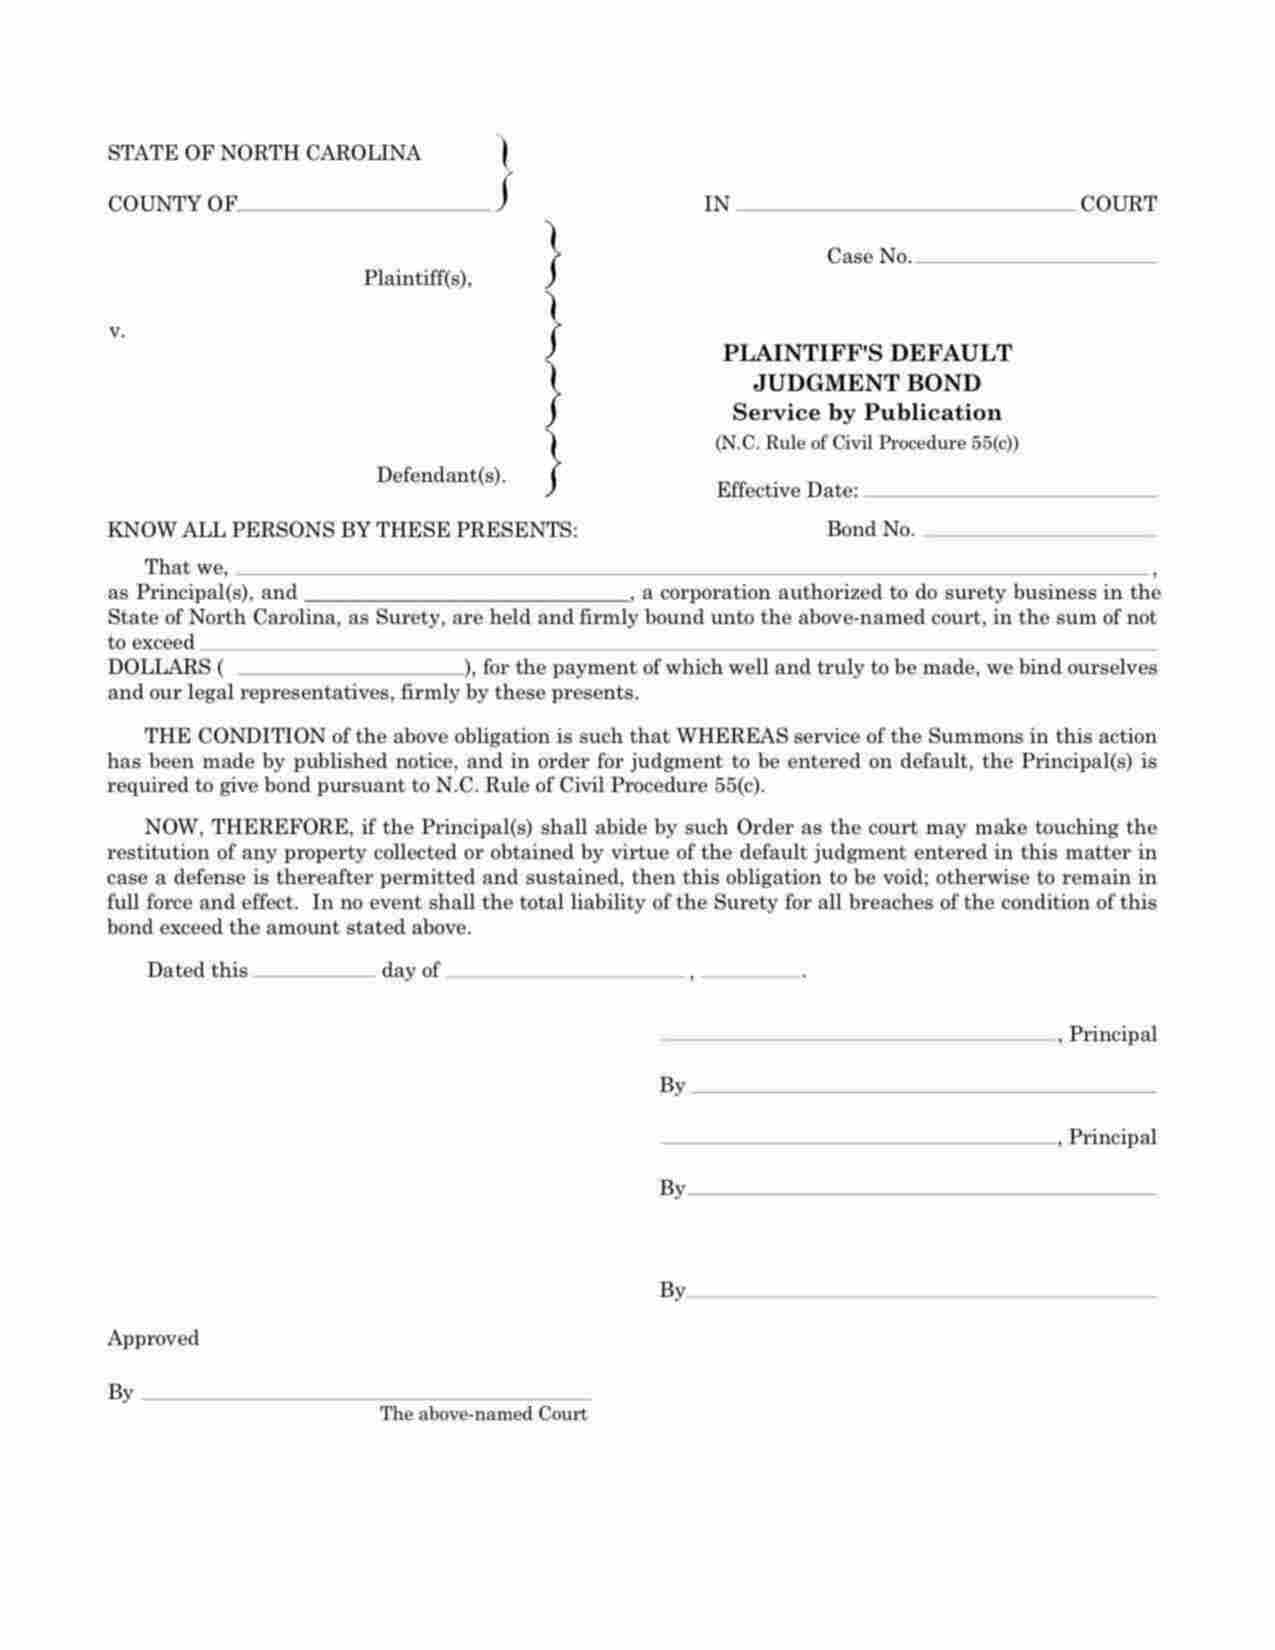 North Carolina Plaintiffs Default Judgment - Service by Publication Bond Form